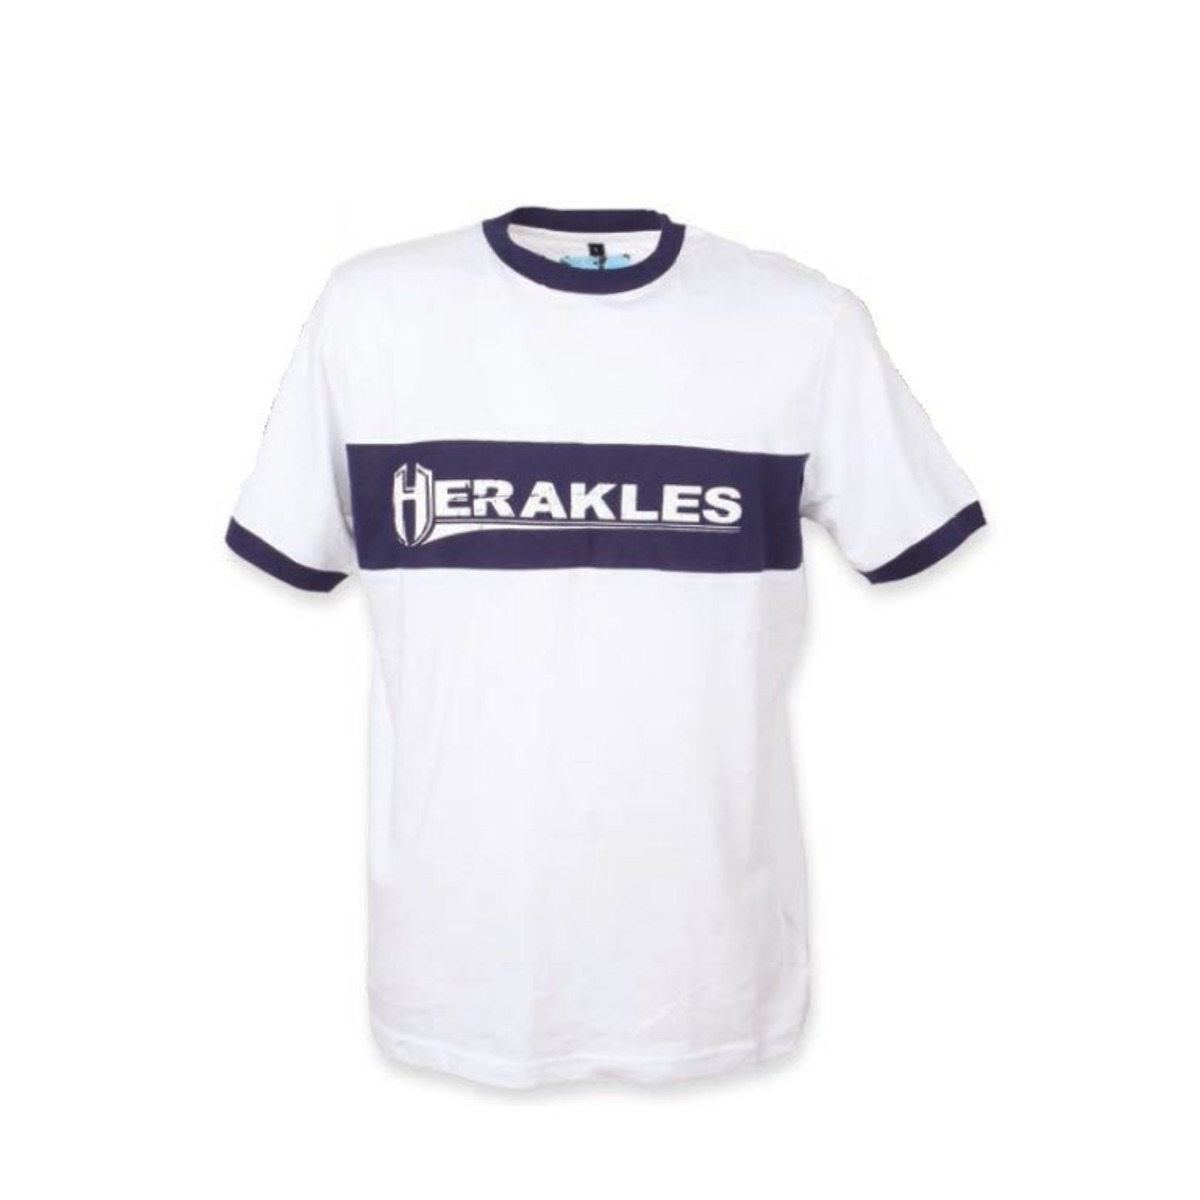 Herakles White-Blue T-Shirt - XL